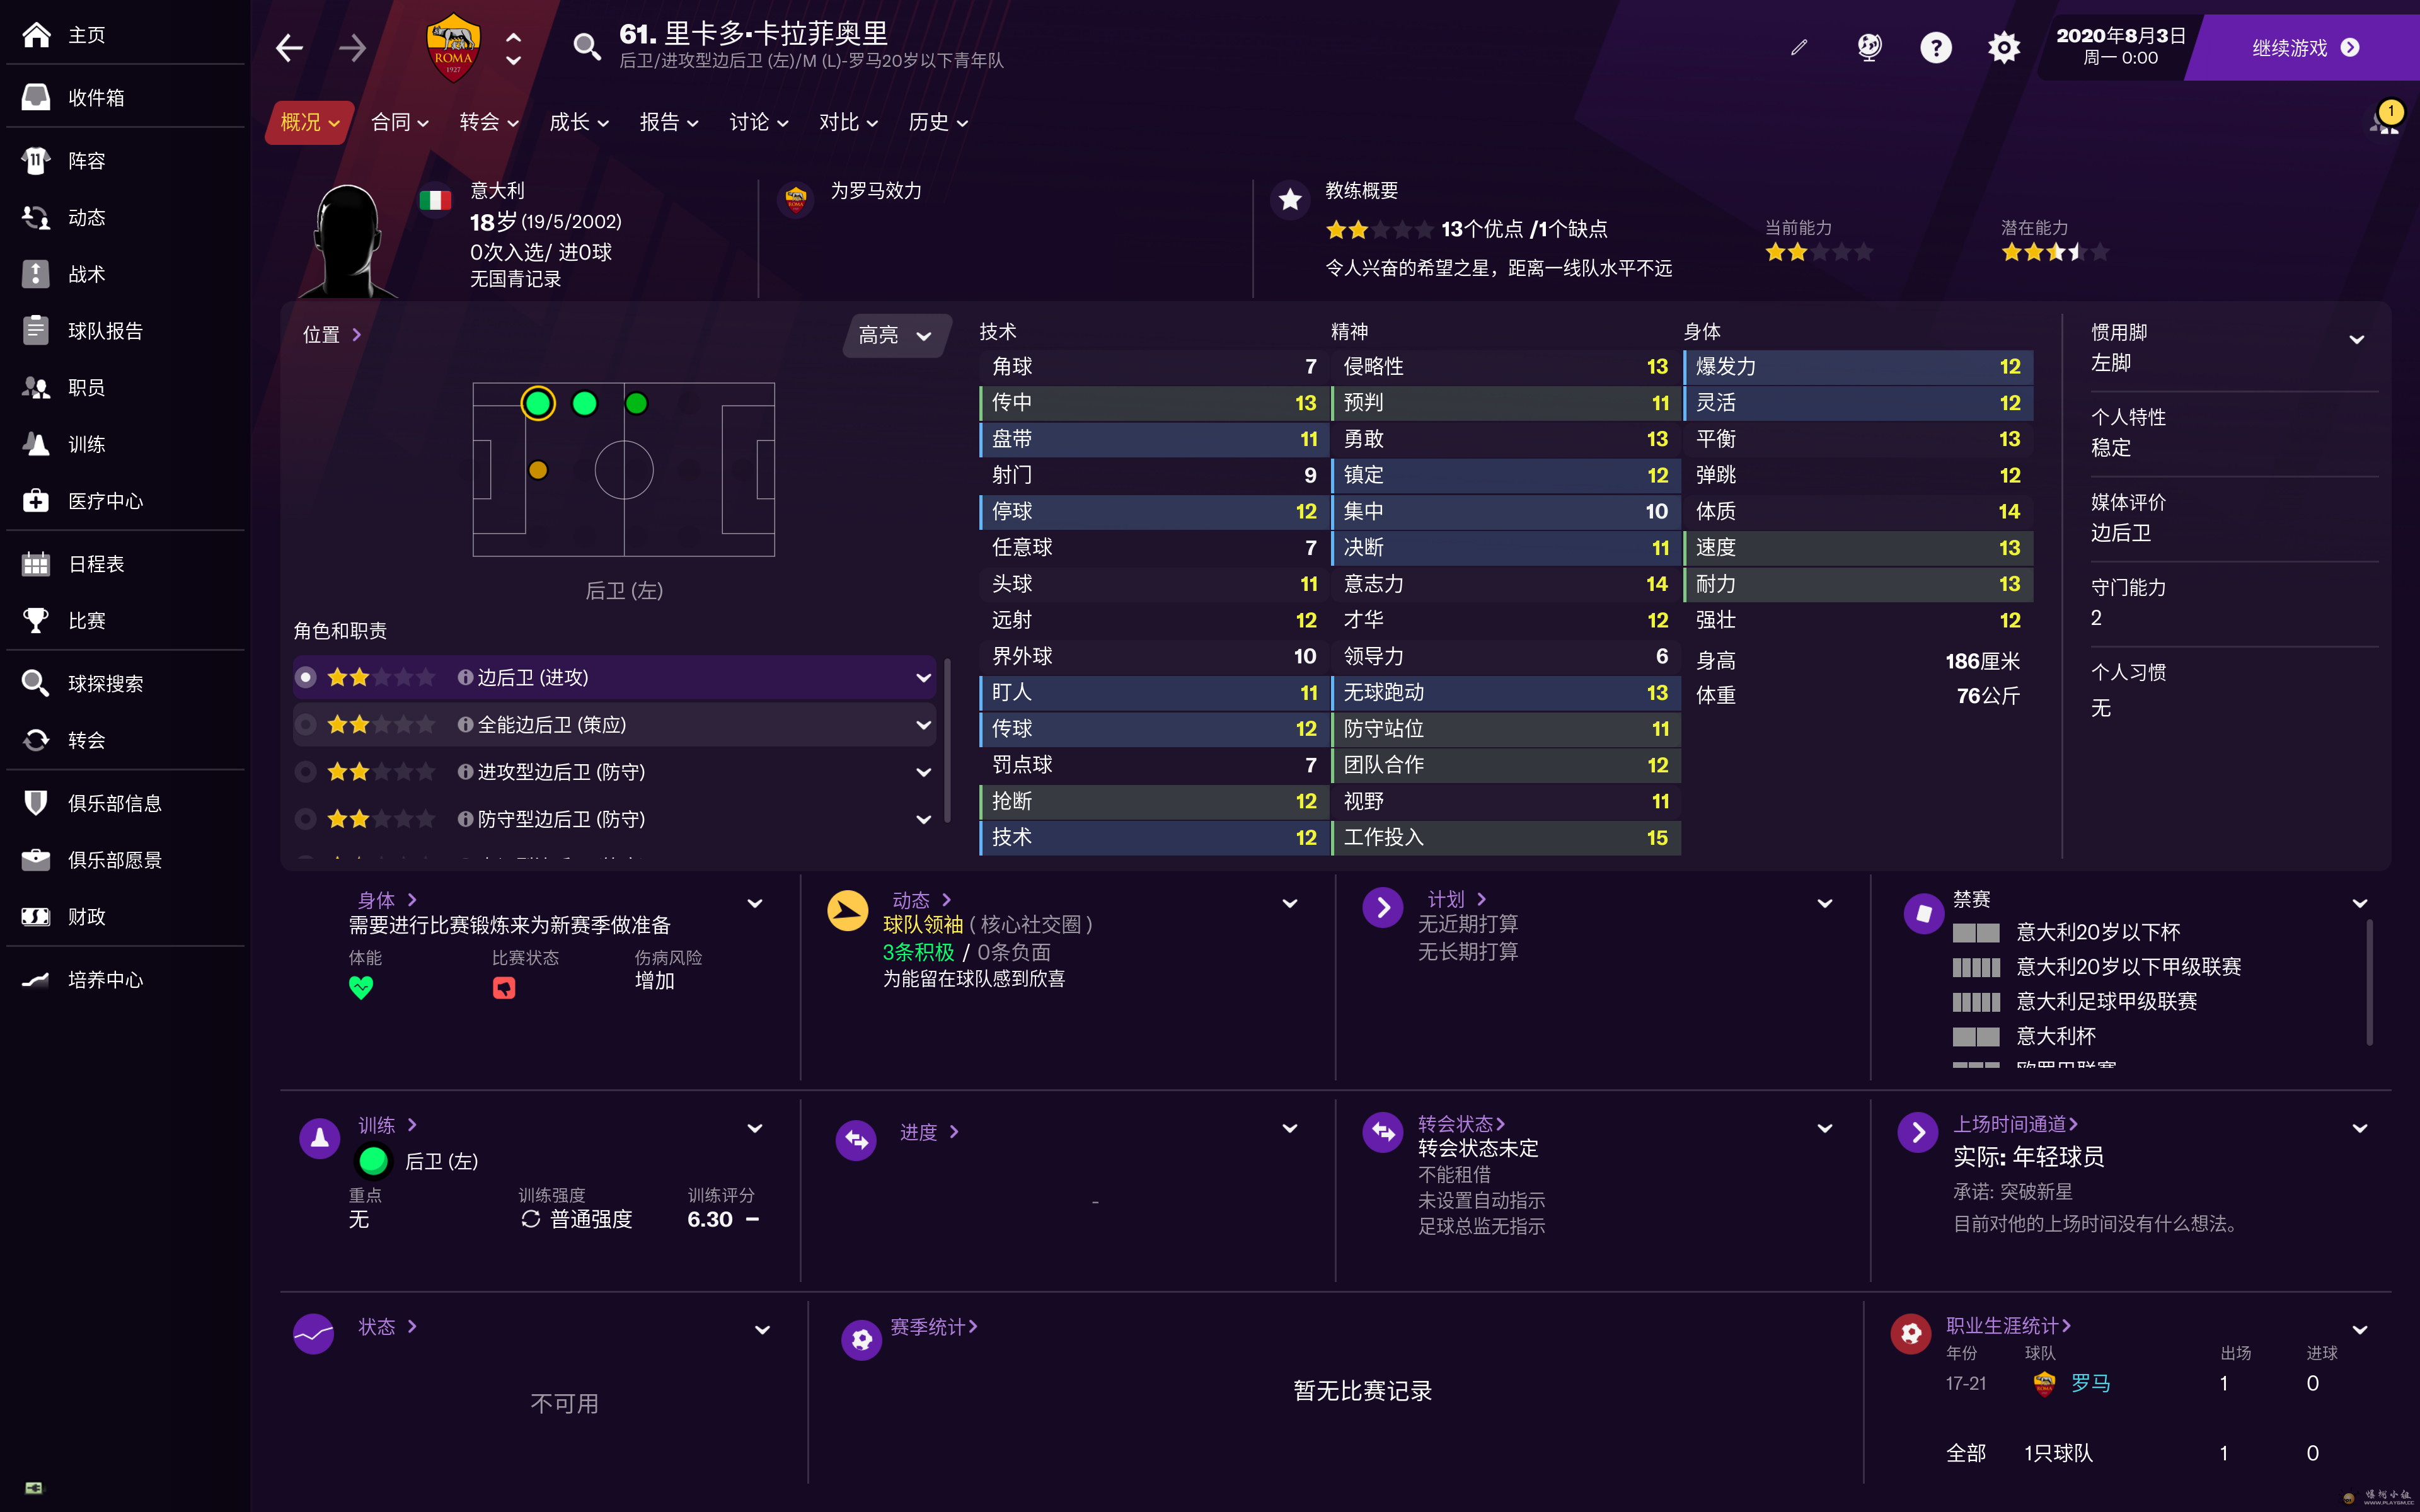 Screenshot 5 - Chinese.png